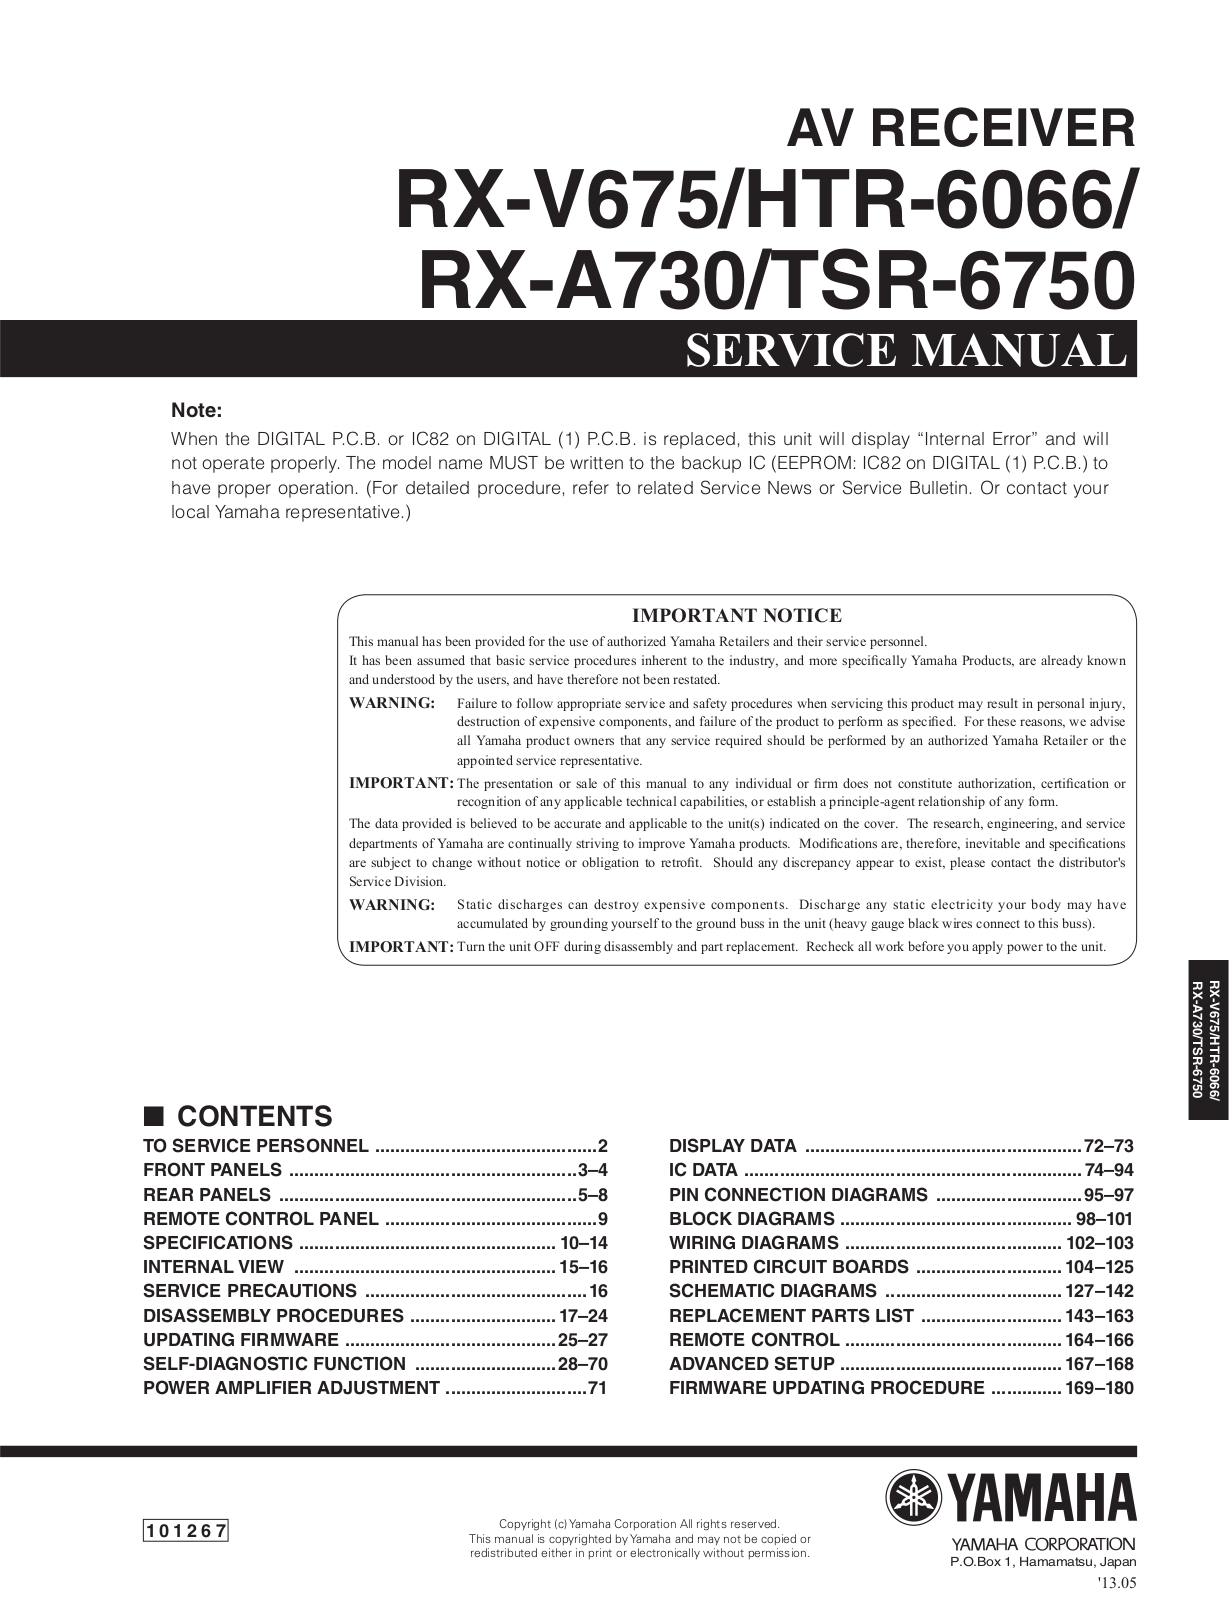 Yamaha TSR-6750, RXV-675, HTR-6066 Service Manual